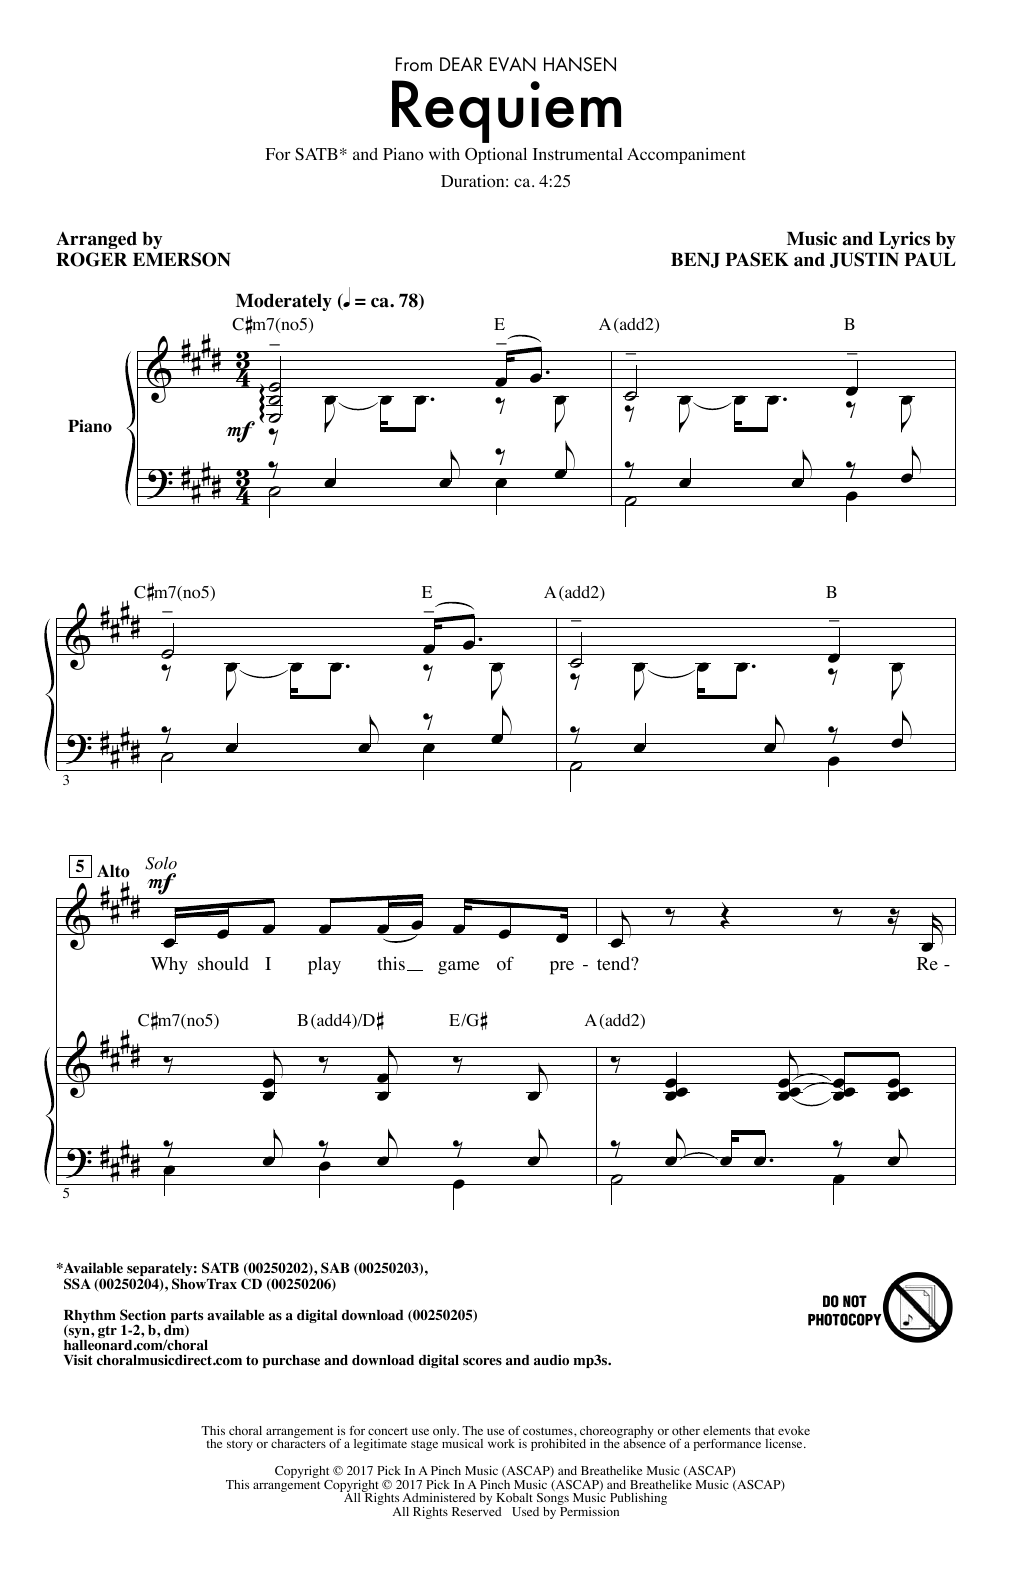 Pasek & Paul Requiem (from Dear Evan Hansen) (arr. Roger Emerson) sheet music notes and chords arranged for SSA Choir